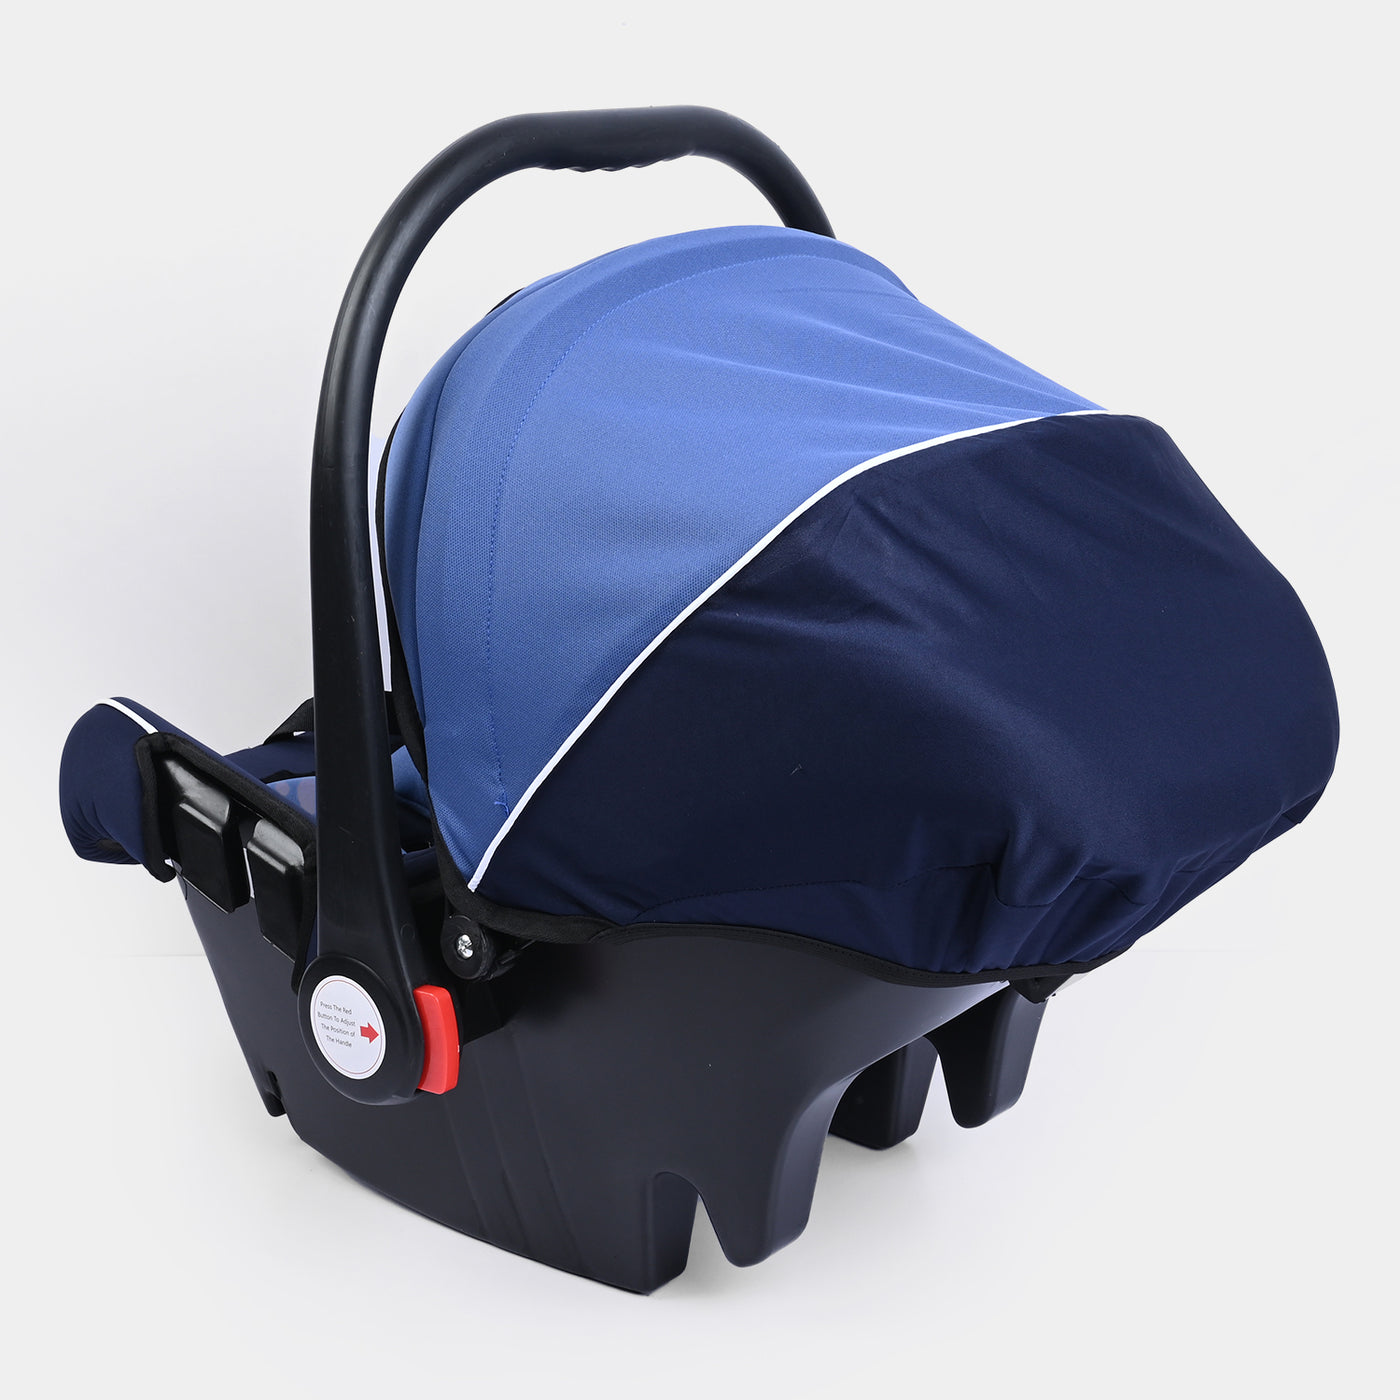 Carry Cot & Car Seat 0-18 Months | Blue